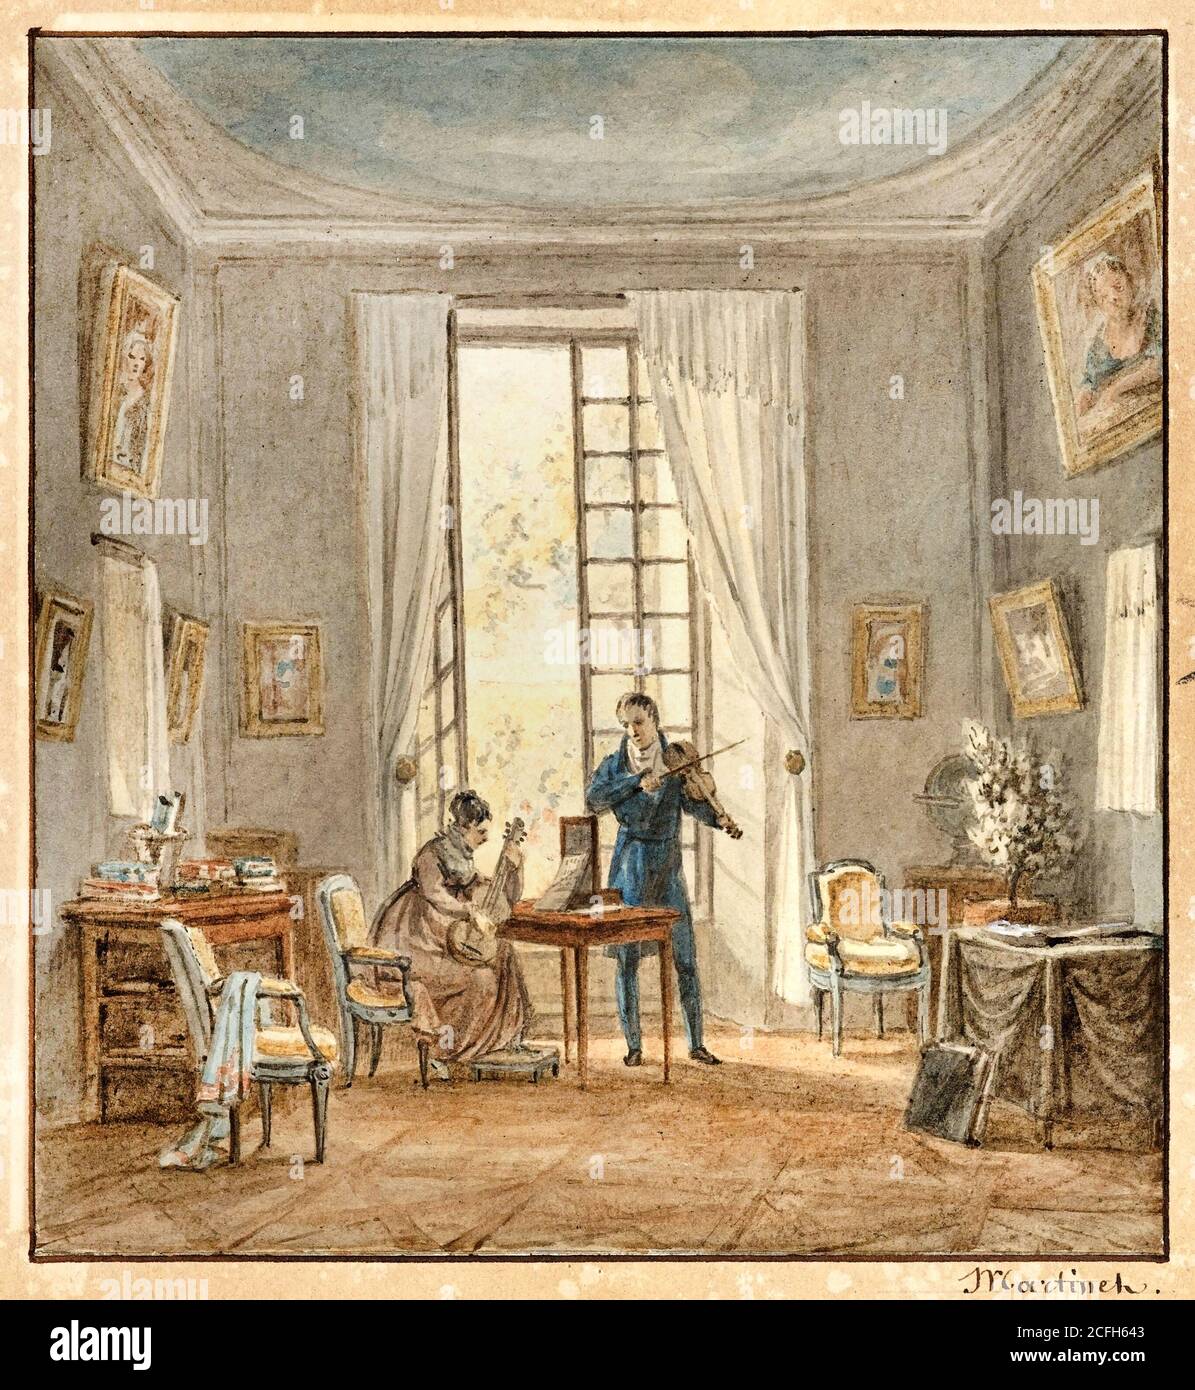 Achille-Louis Martinet, Salon Interior with Gabriel d'Arjuzon Playing the Violin and Pascalie Hosten, Comtess d'Arjuzon, Playing Guitar, Circa 1840, B Stock Photo